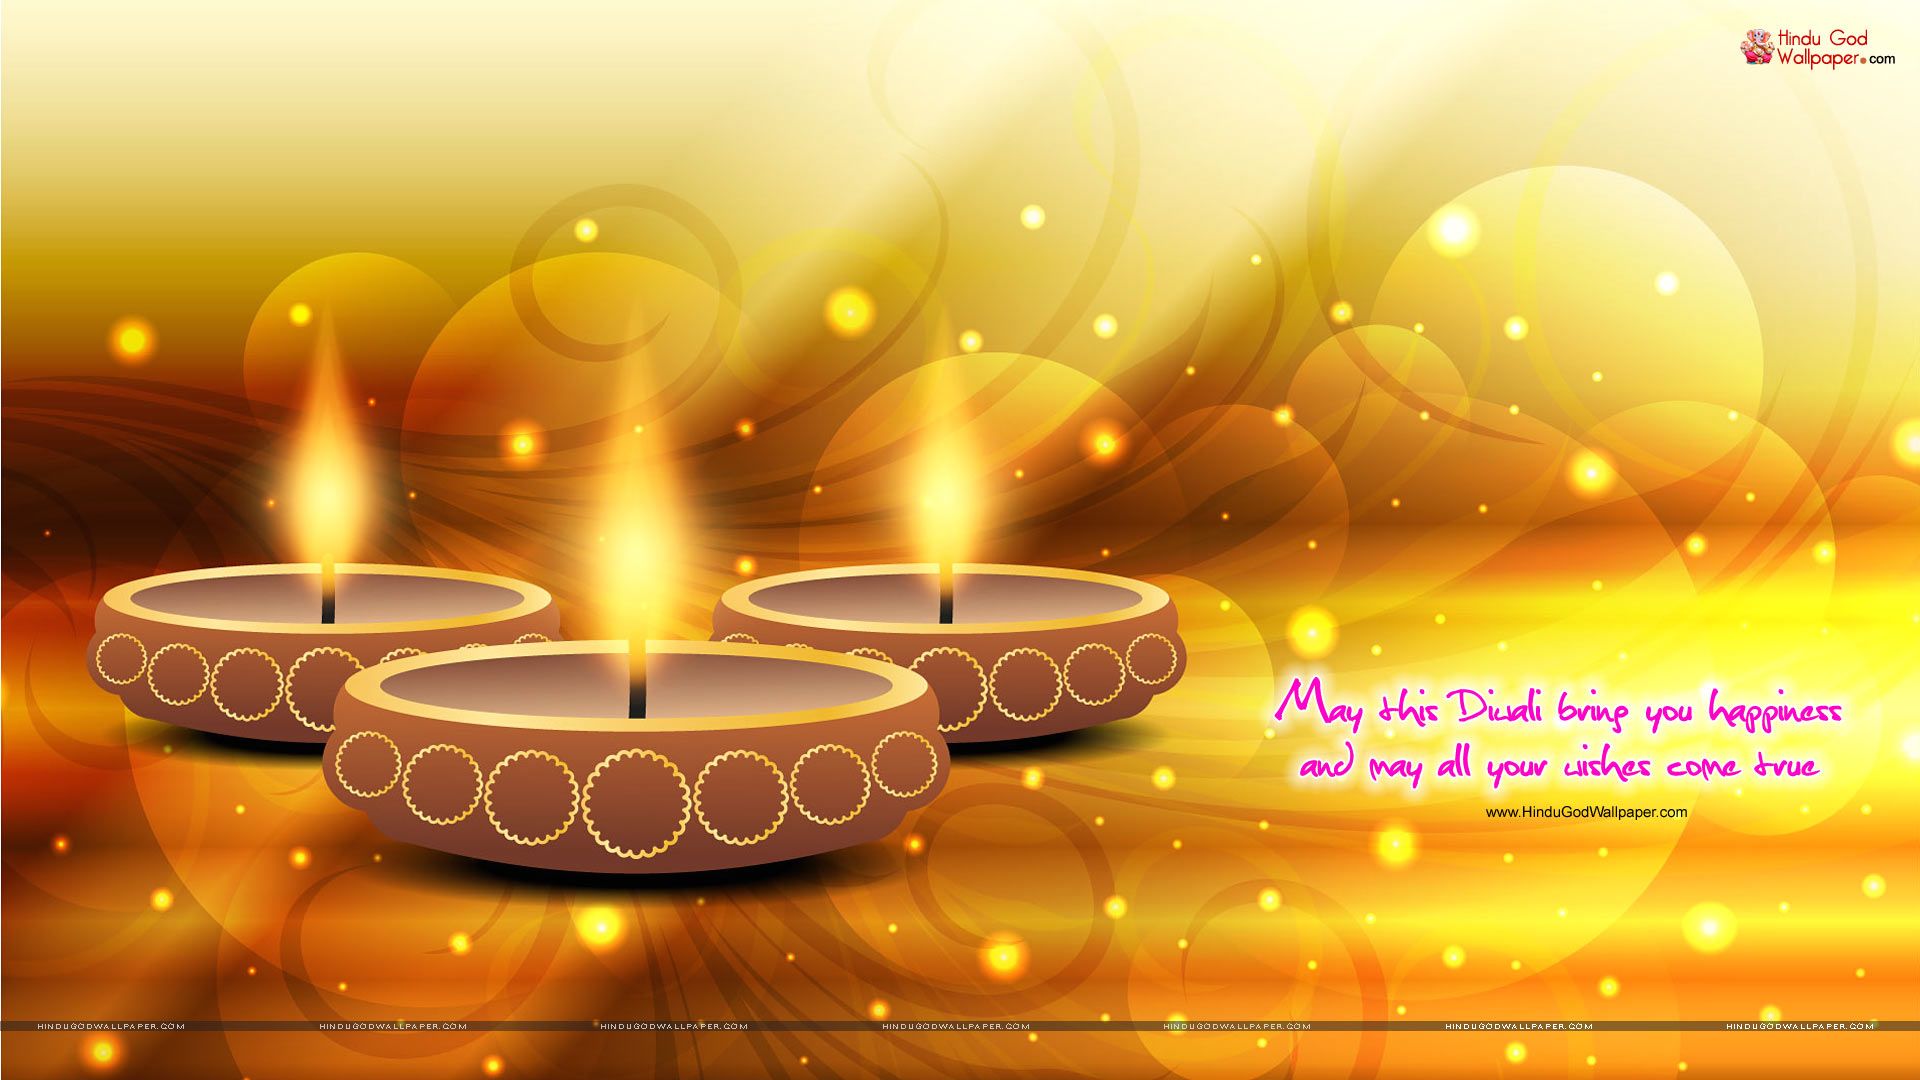 Animated Diwali Diya Wallpaper, Image & Picture Download. Happy diwali image, Happy diwali image hd, Diwali greetings